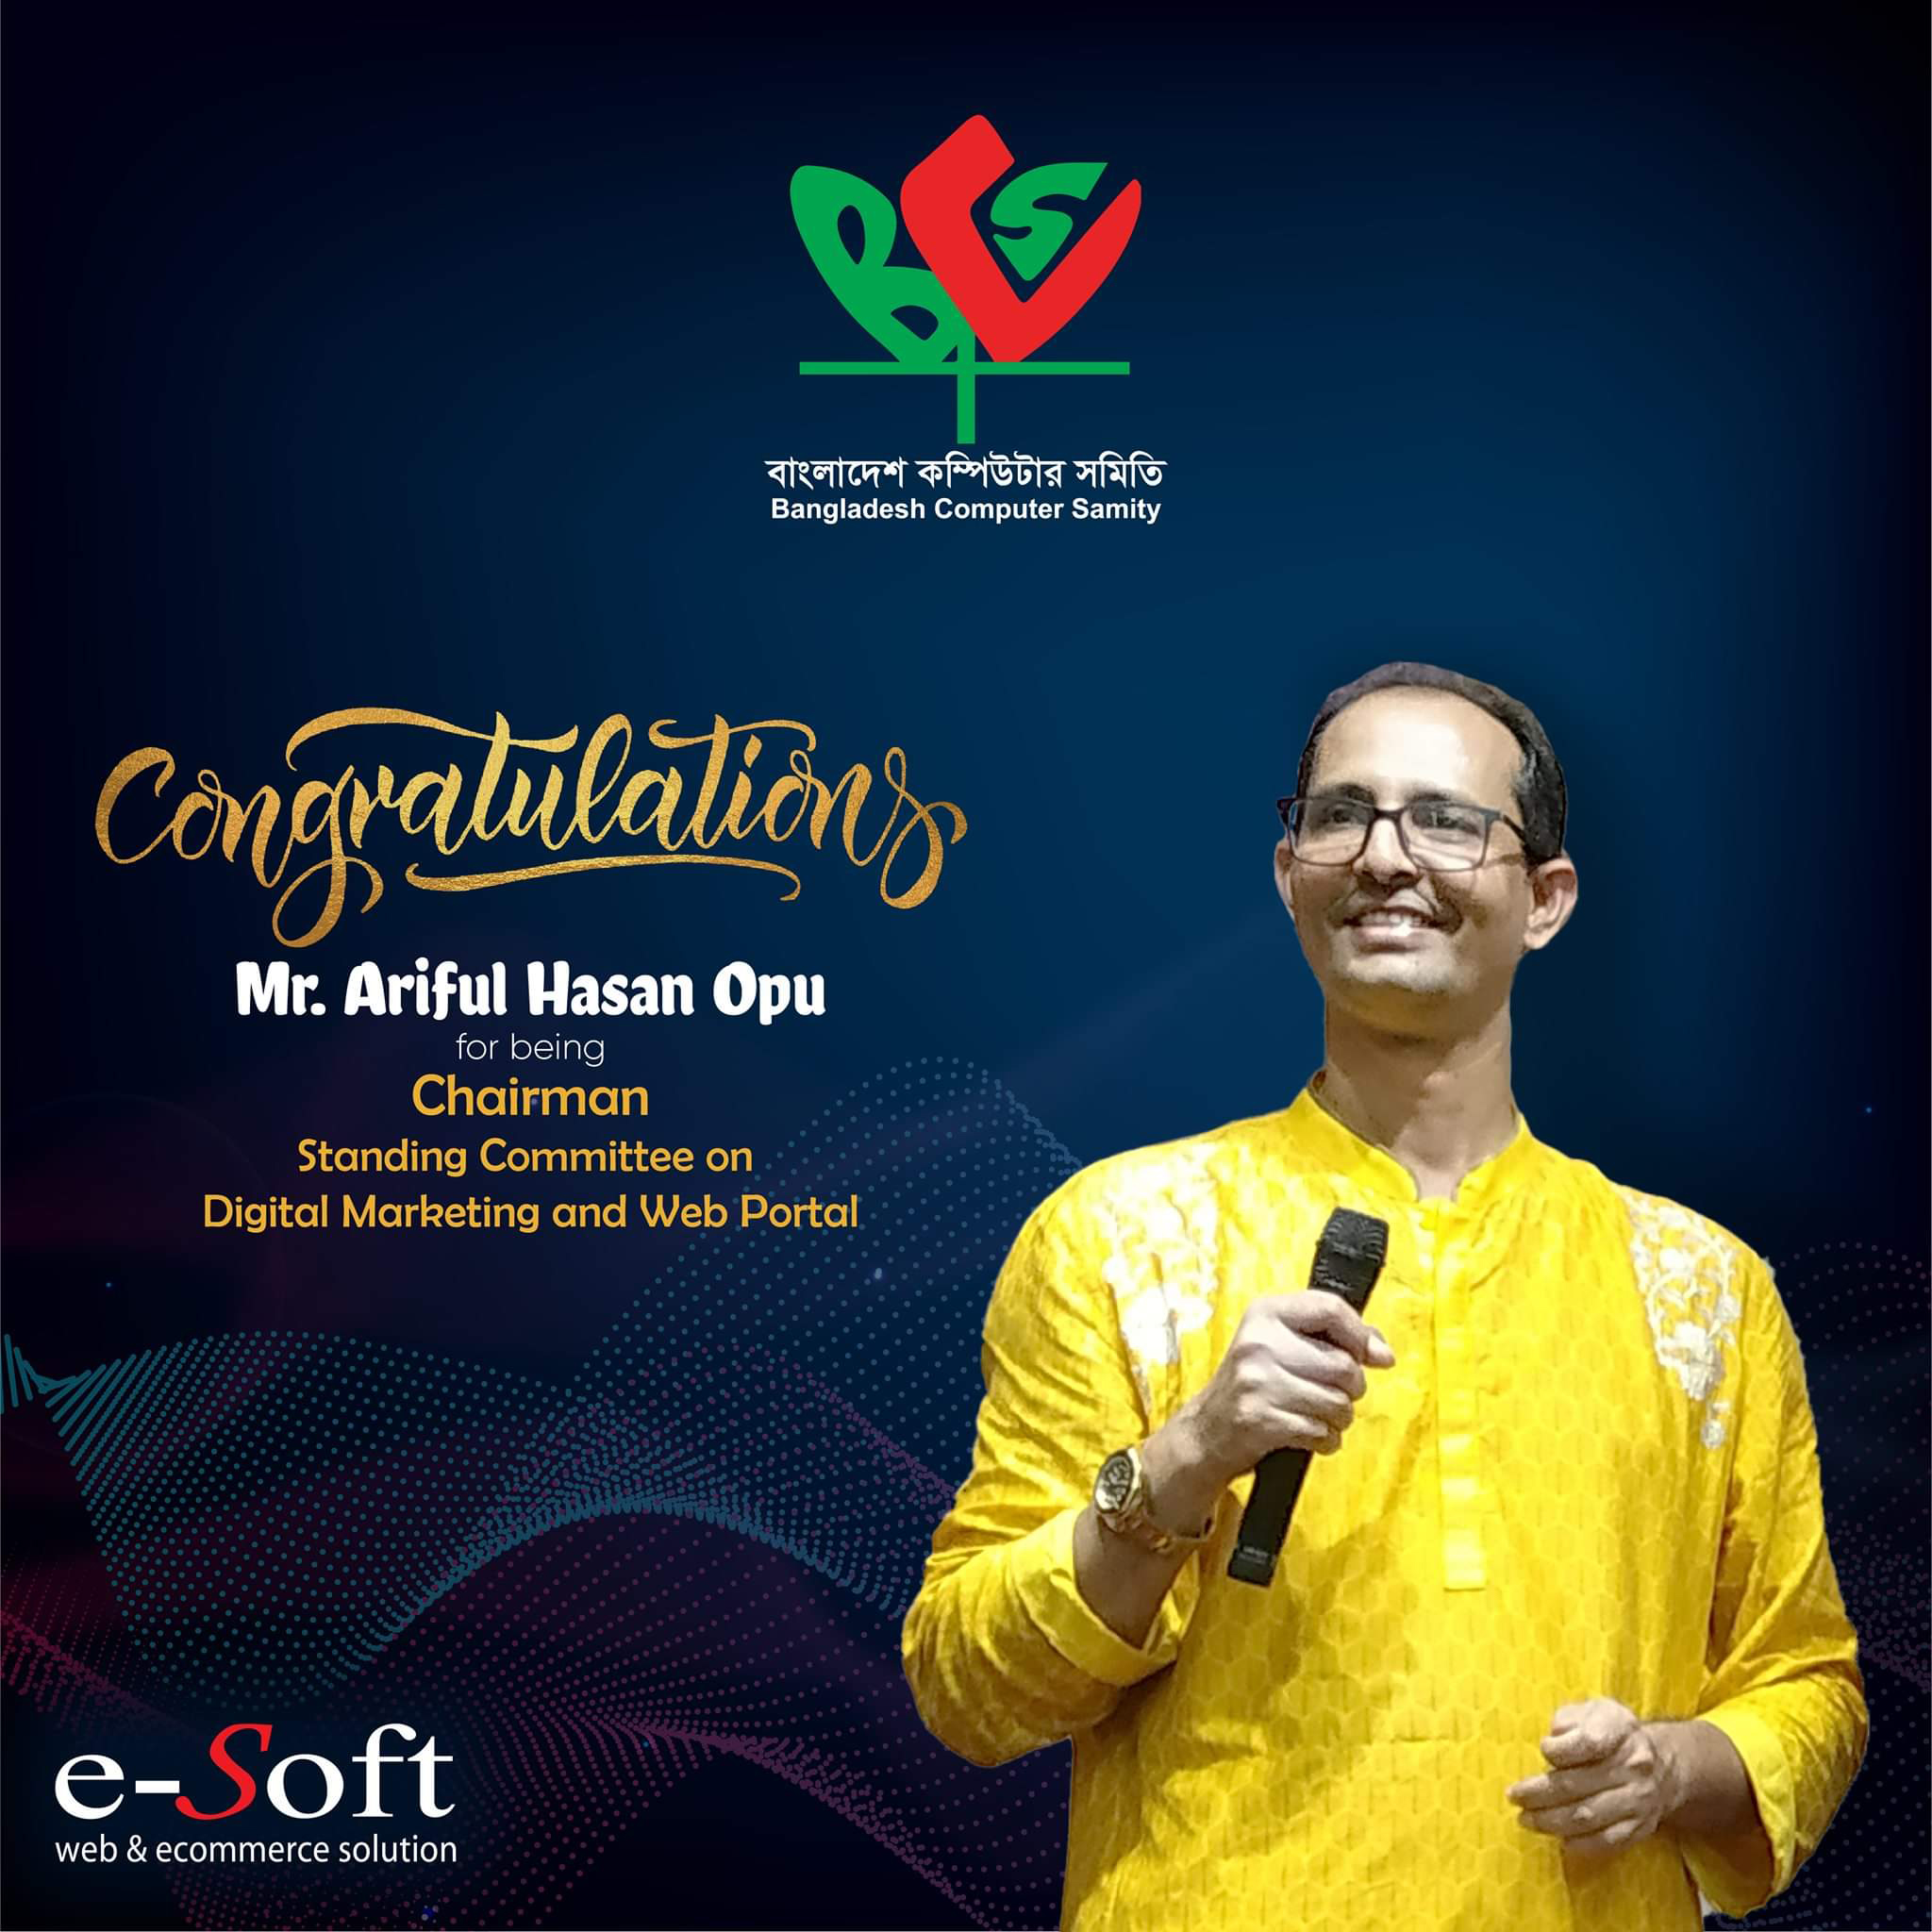 Congratulations to Mr. Ariful Hasan Opu